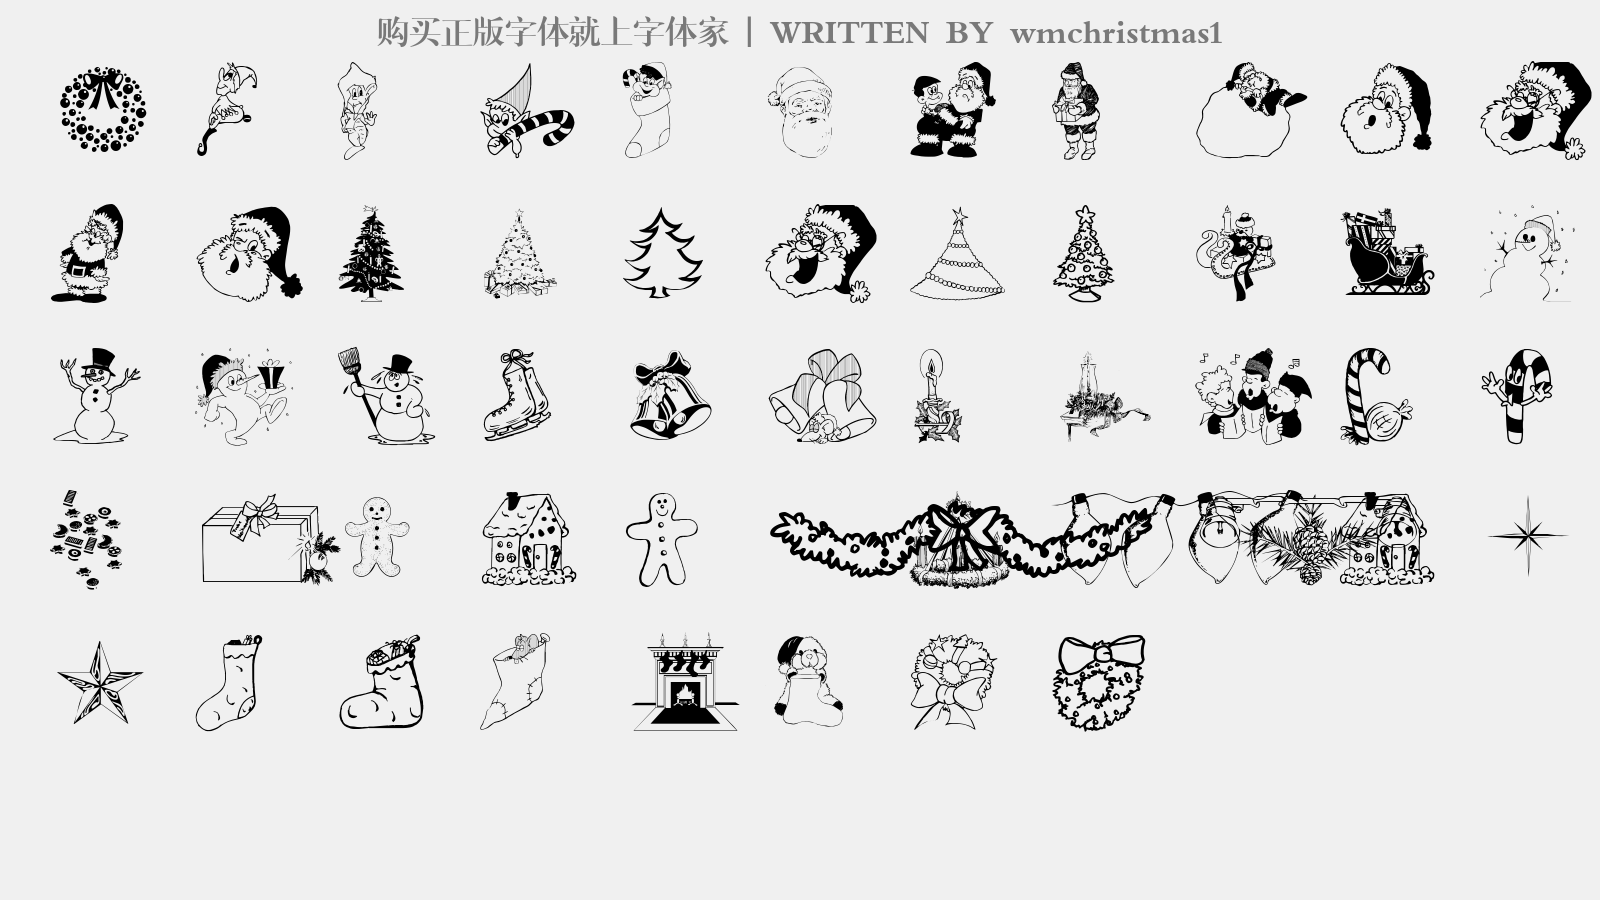 wmchristmas1 - 大写字母/小写字母/数字